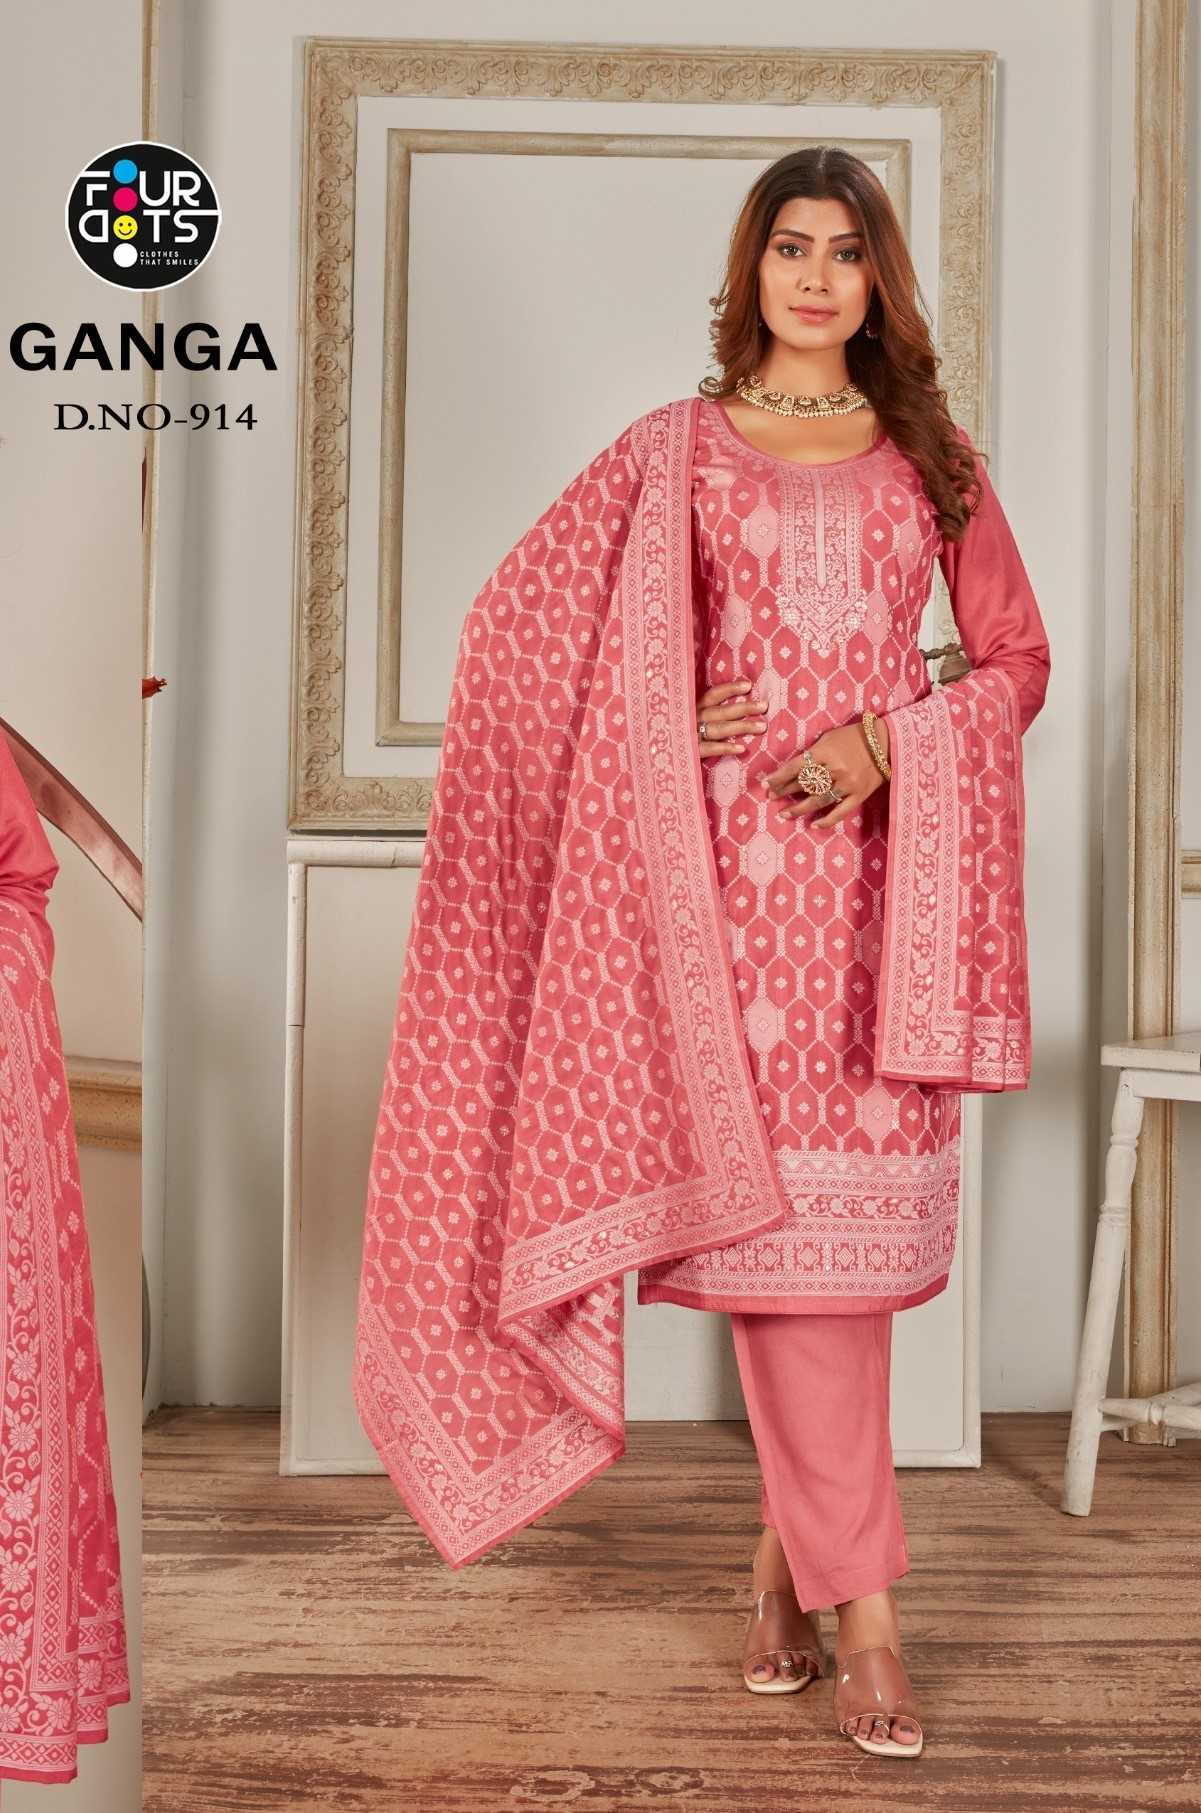 fourdots ganga fancy wear lakhnavi jacquard unstitch salwar kameez suit